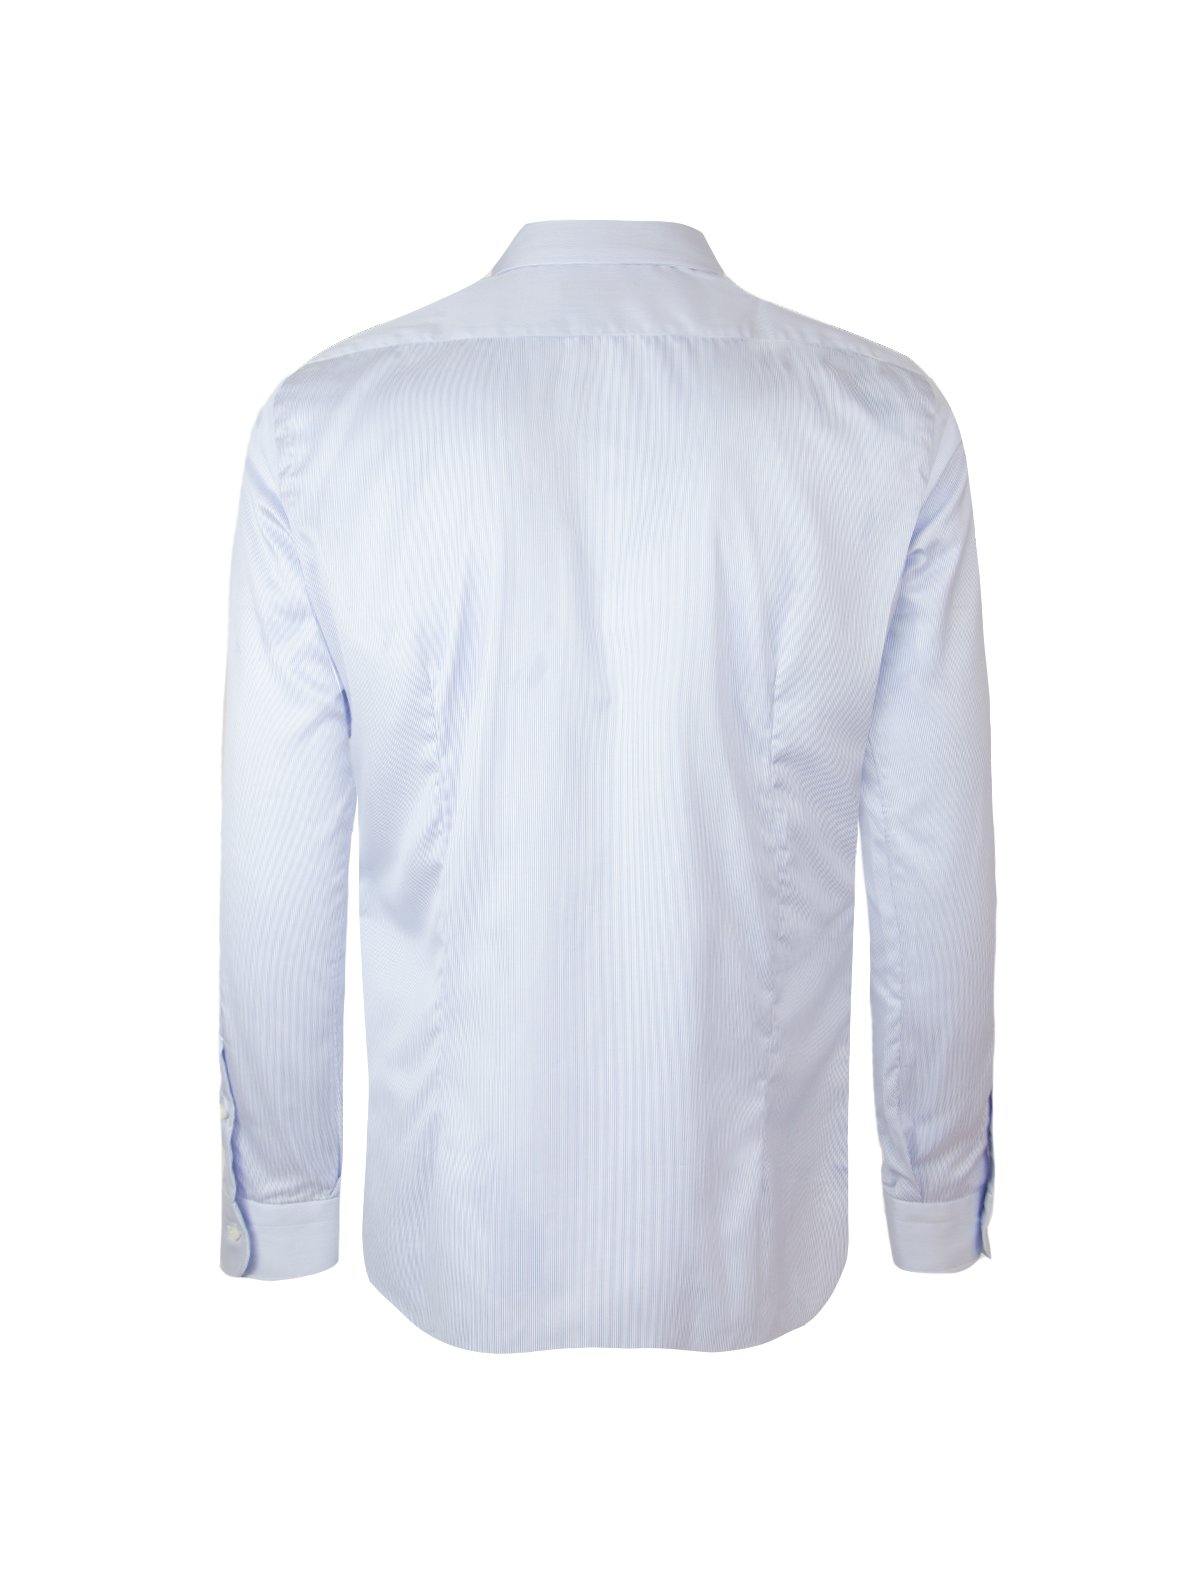 BARBA Journey Wrinkle-Resistant Shirt in White/Light Blue Stripes | CLOSET Singapore